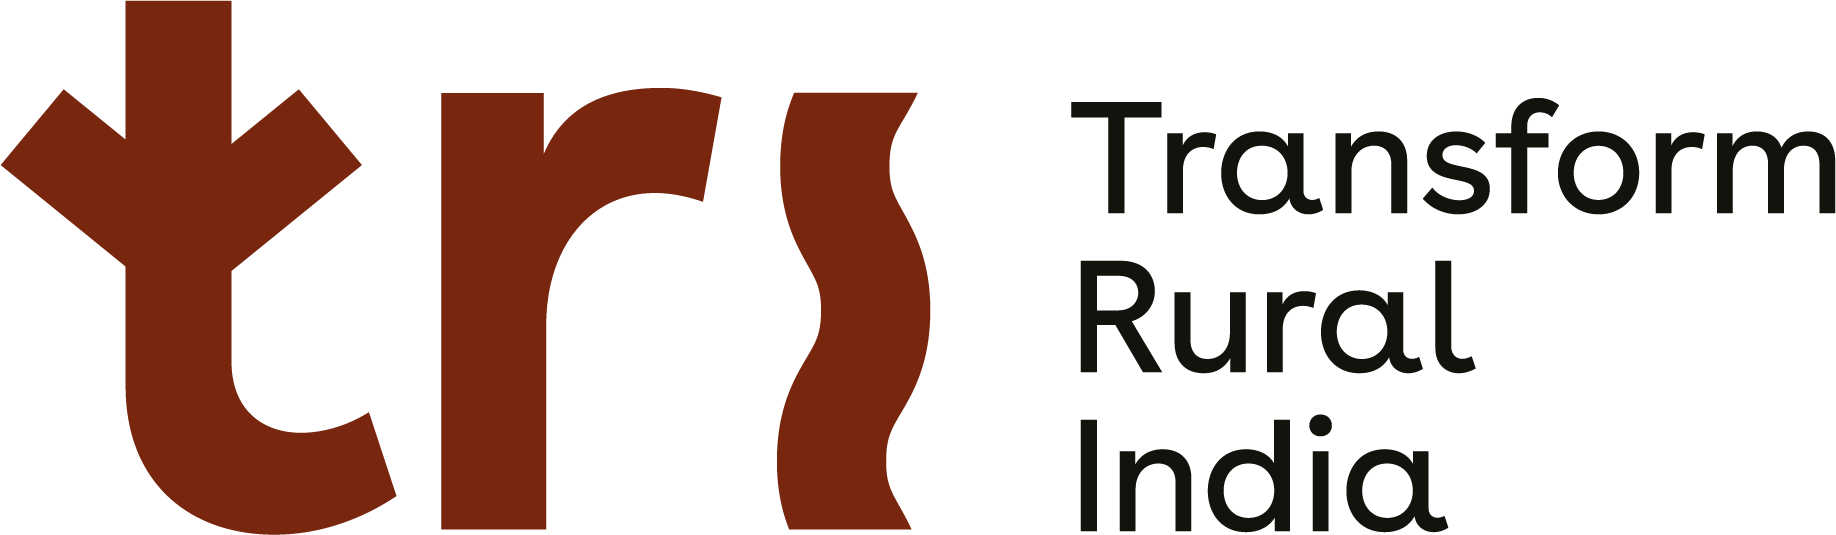 Transforming Rural India Foundation logo